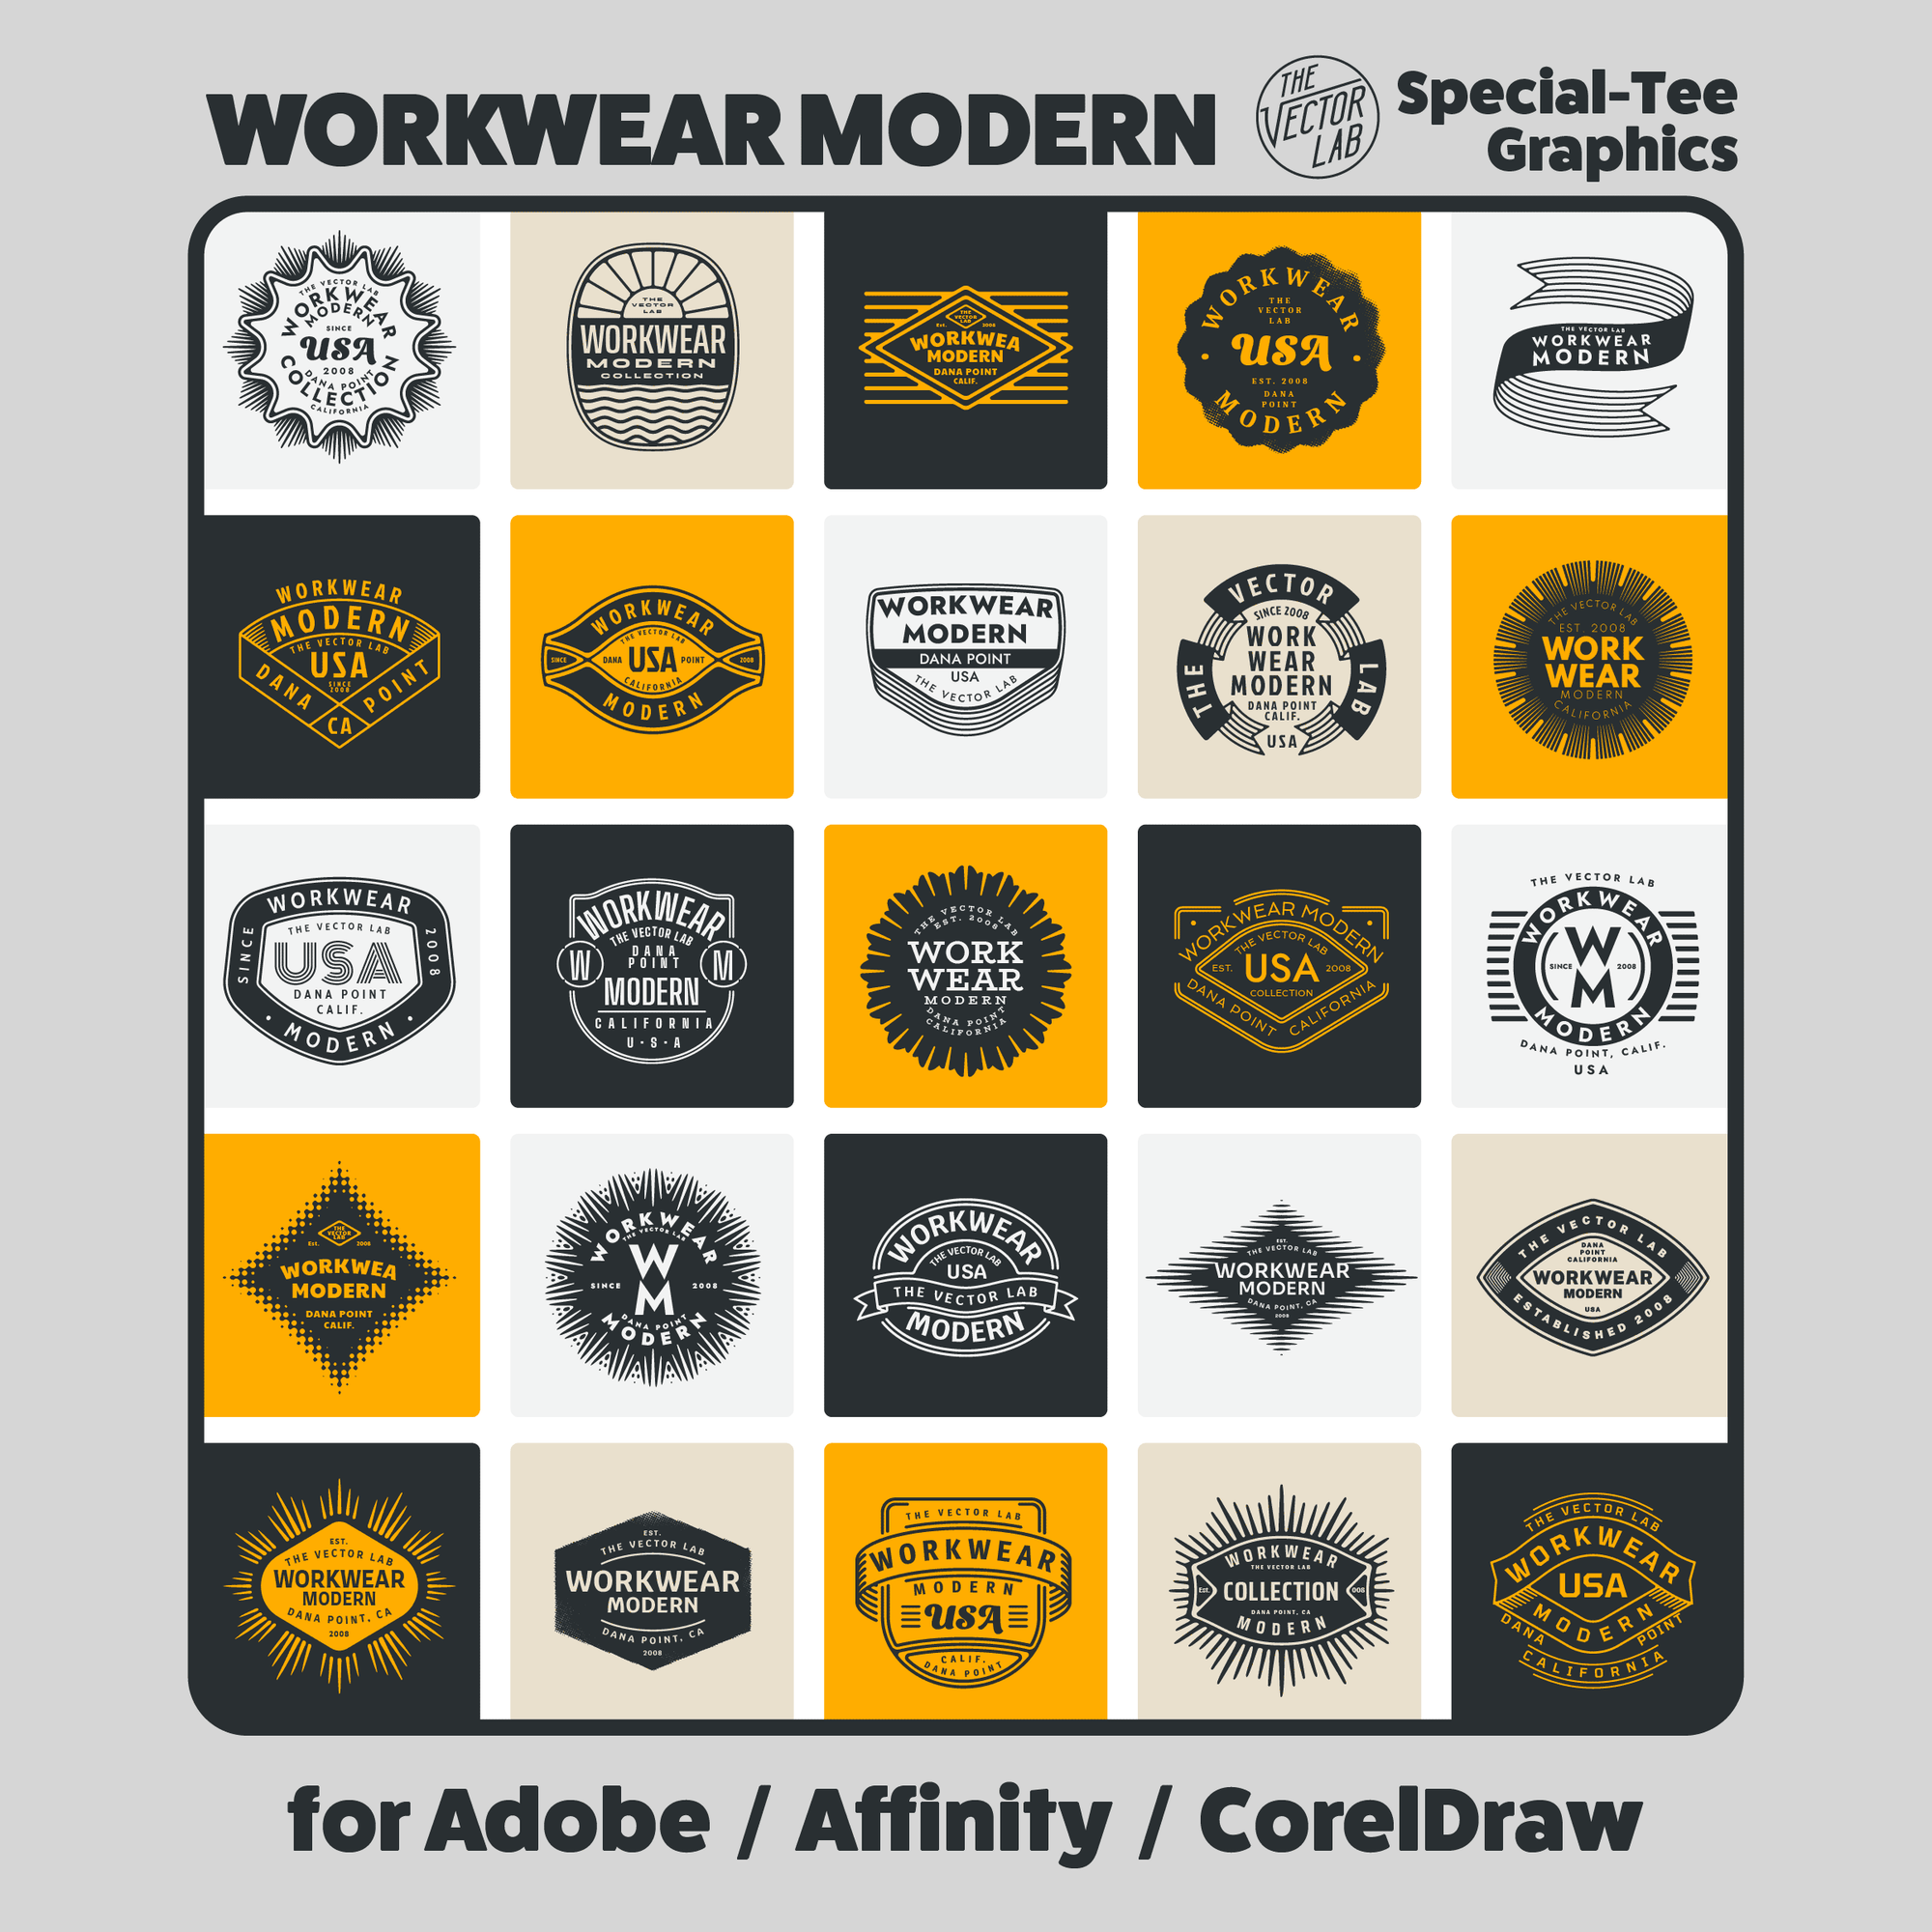 Workwear Modern Graphic & Logo Templates for Adobe, Affinity, Corel